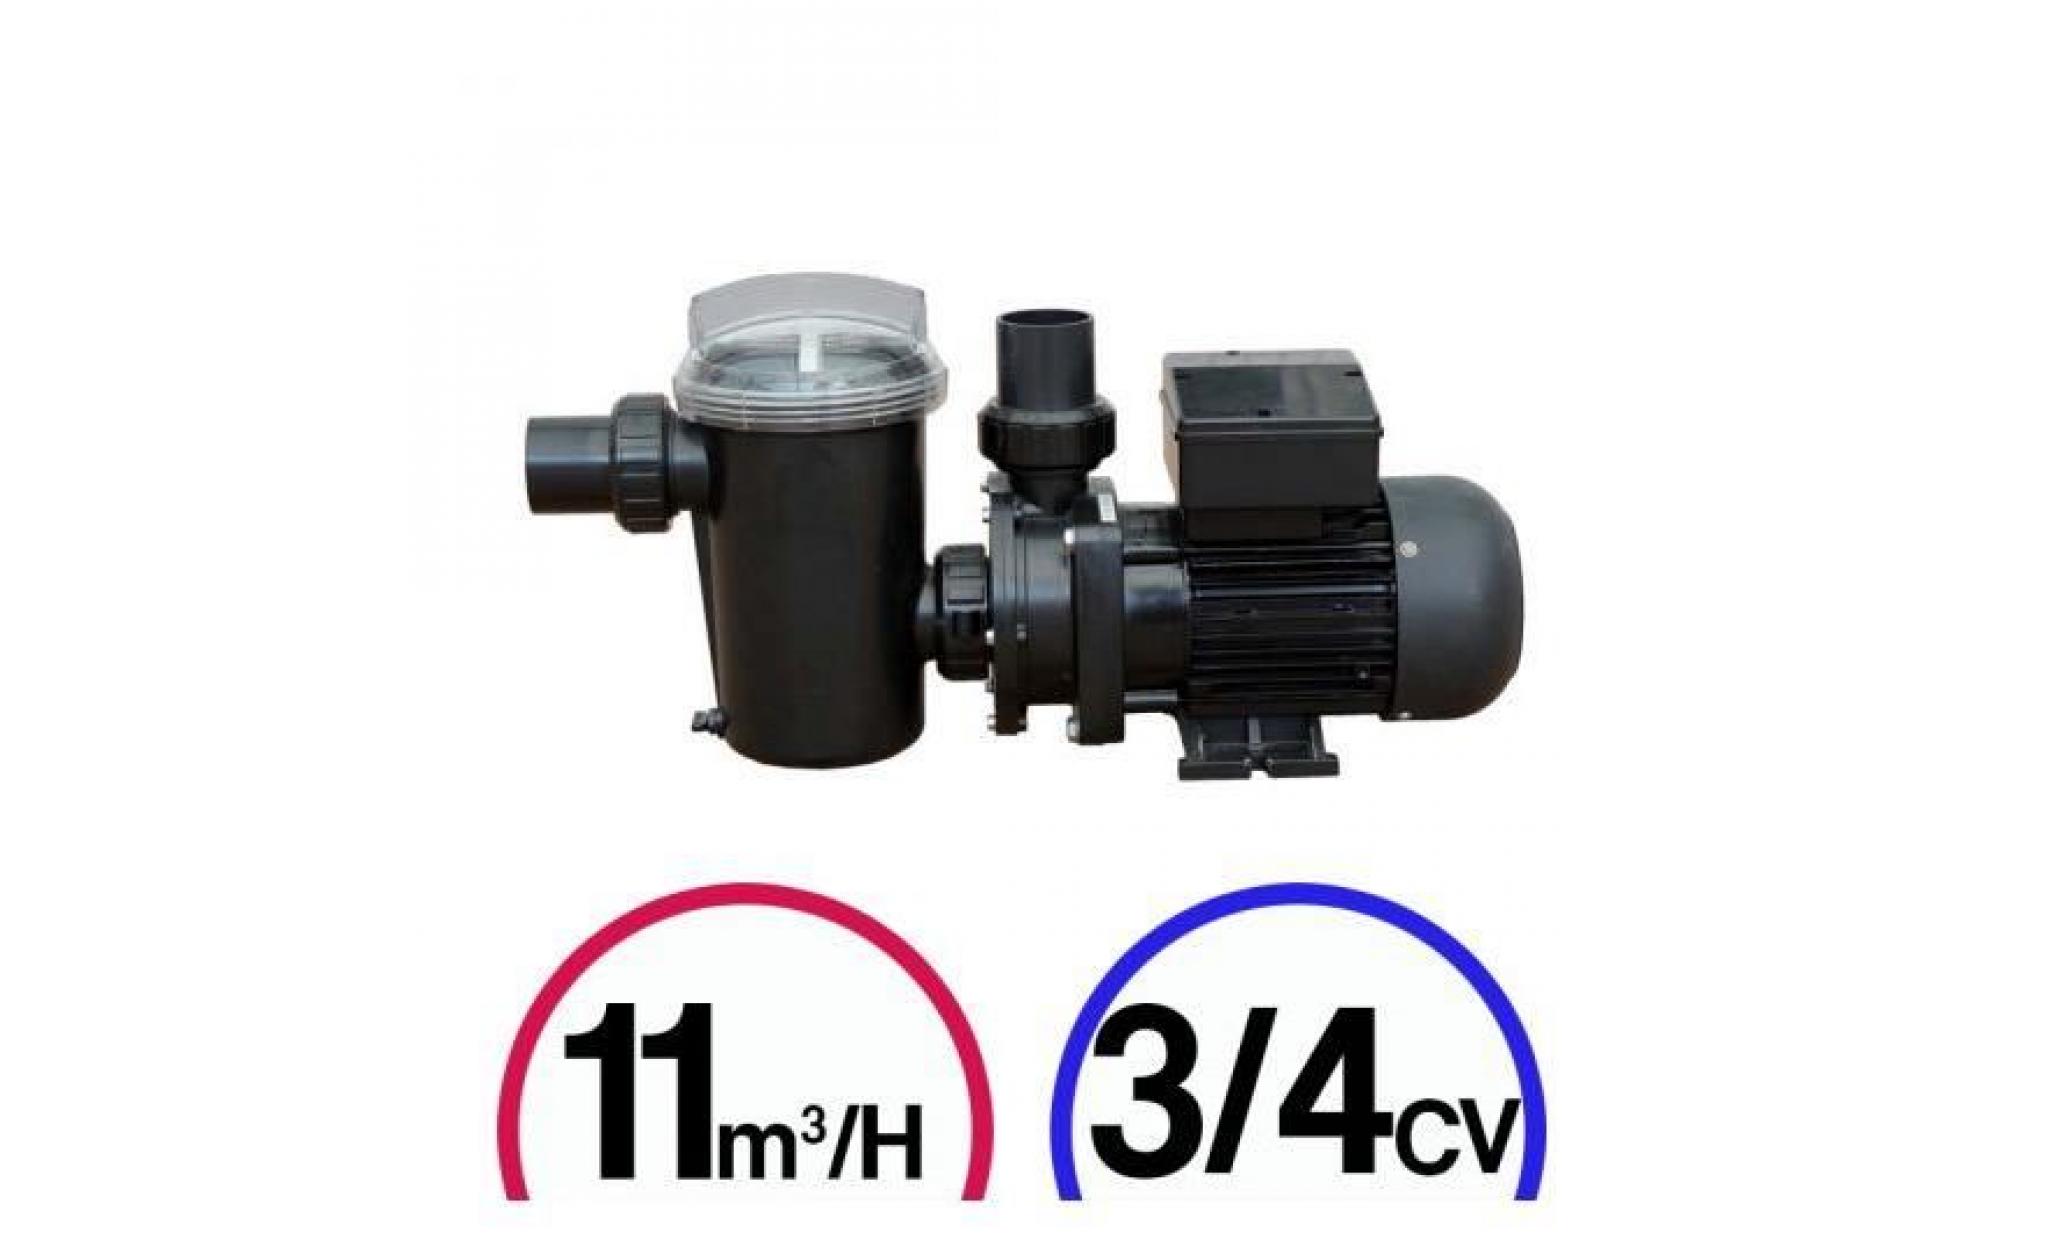 pompe filtration piscine   3/4cv mono 11m³/h   poolstyle